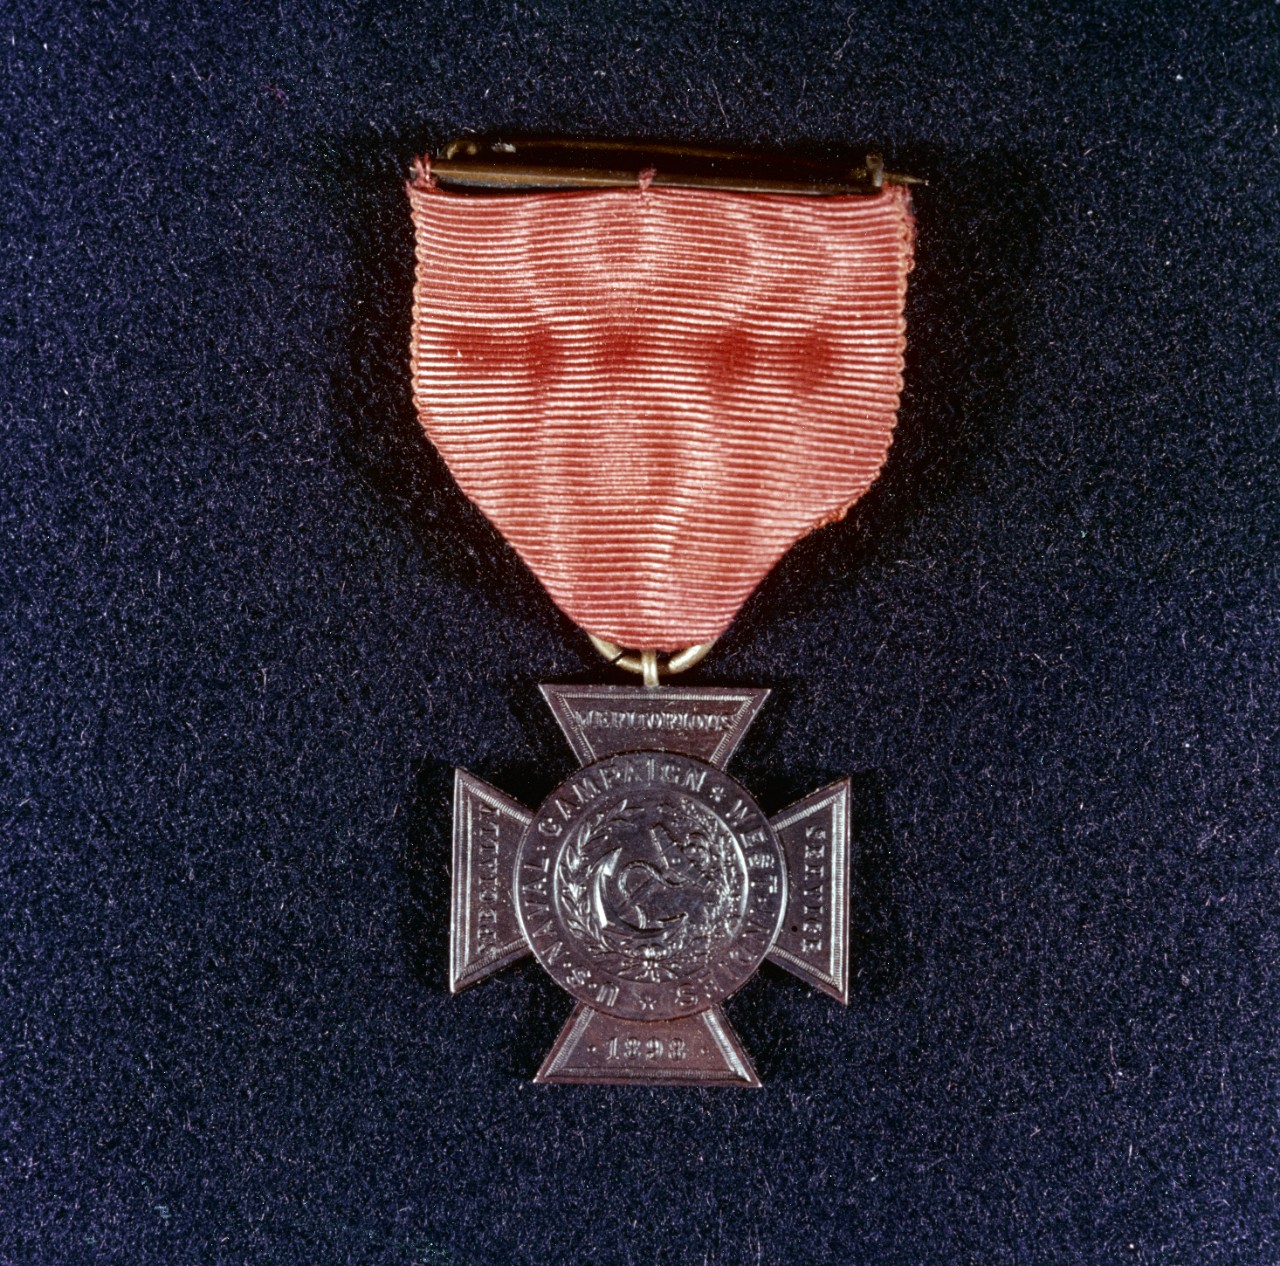 Specially Meritorious Medal